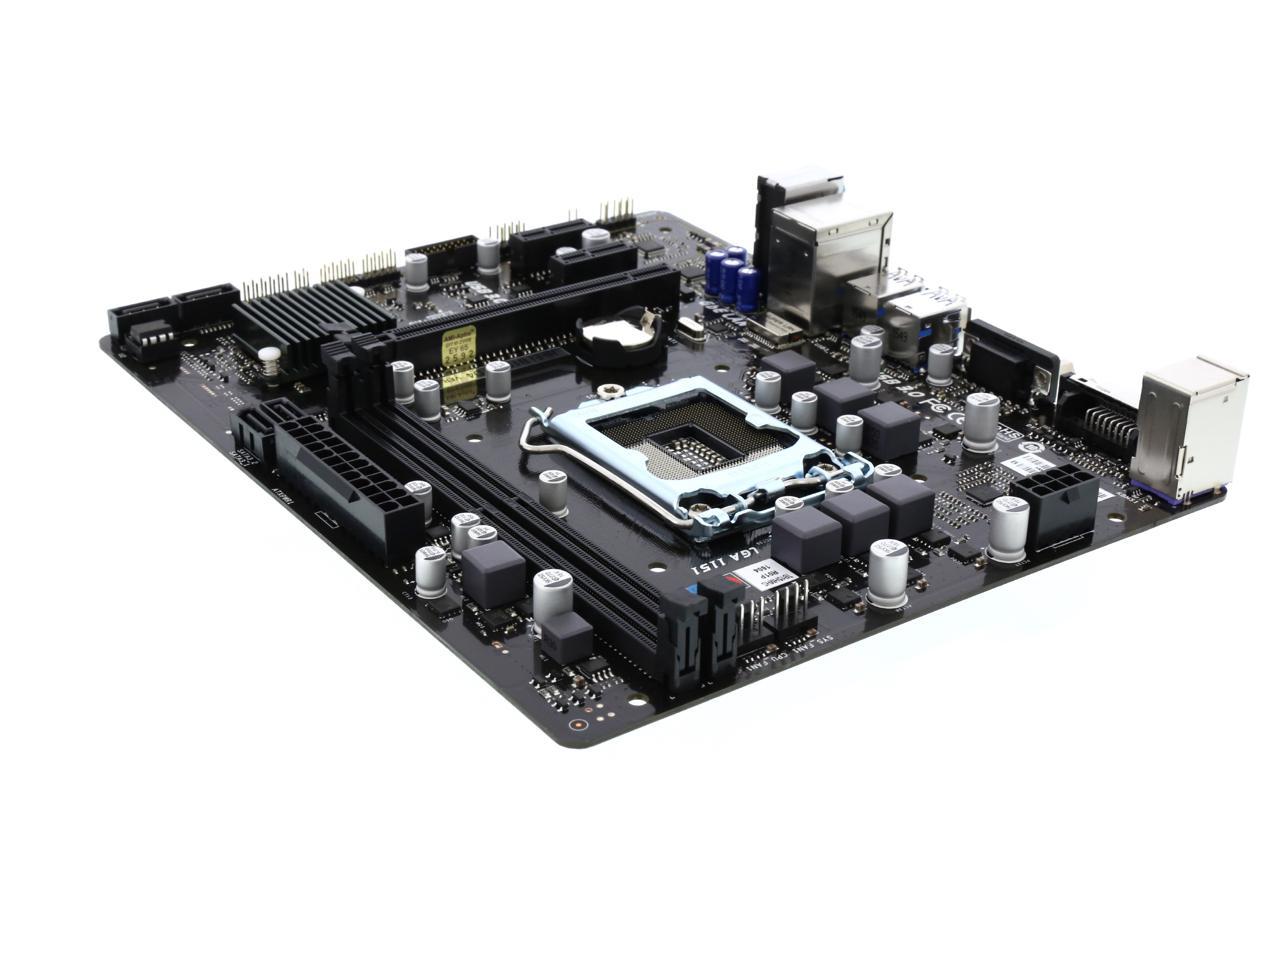 BIOSTAR Hi-Fi B150S1 D4 Ver. 6.x LGA 1151 Intel B150 SATA 6Gb/s USB 3.0  Micro ATX Intel Motherboard